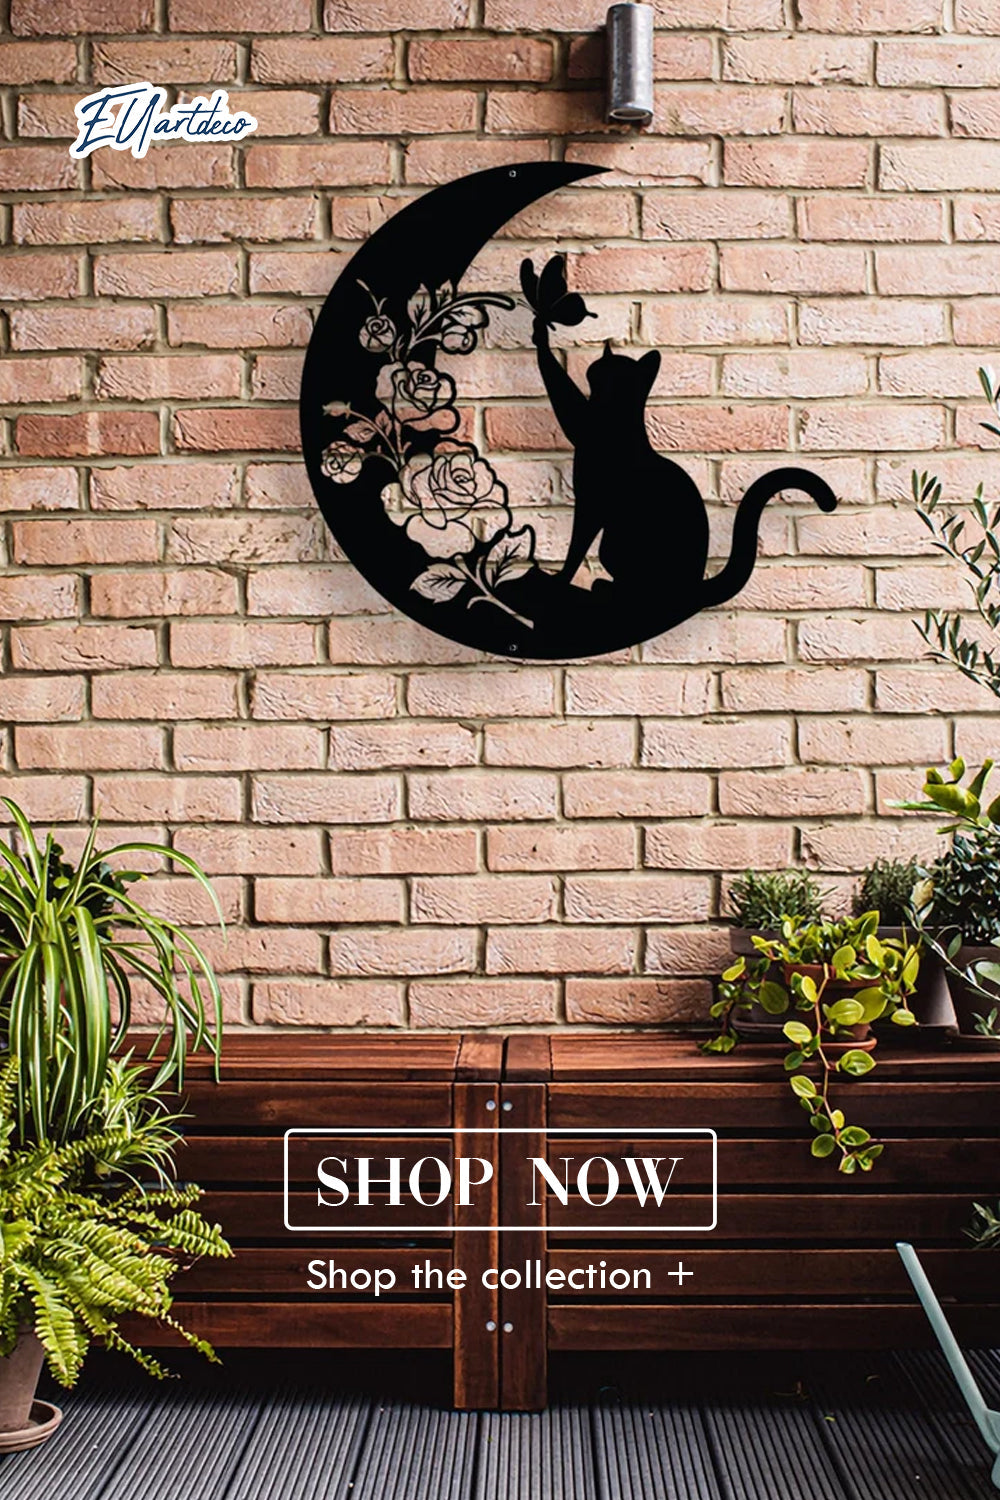 Cat and Moon Metal Wall Art, Cat Wall Decor, Cat on Moon, Cat Lover Gift, Animal Decor, Home Decor, Housewarming Gift, Moon Cat Decor